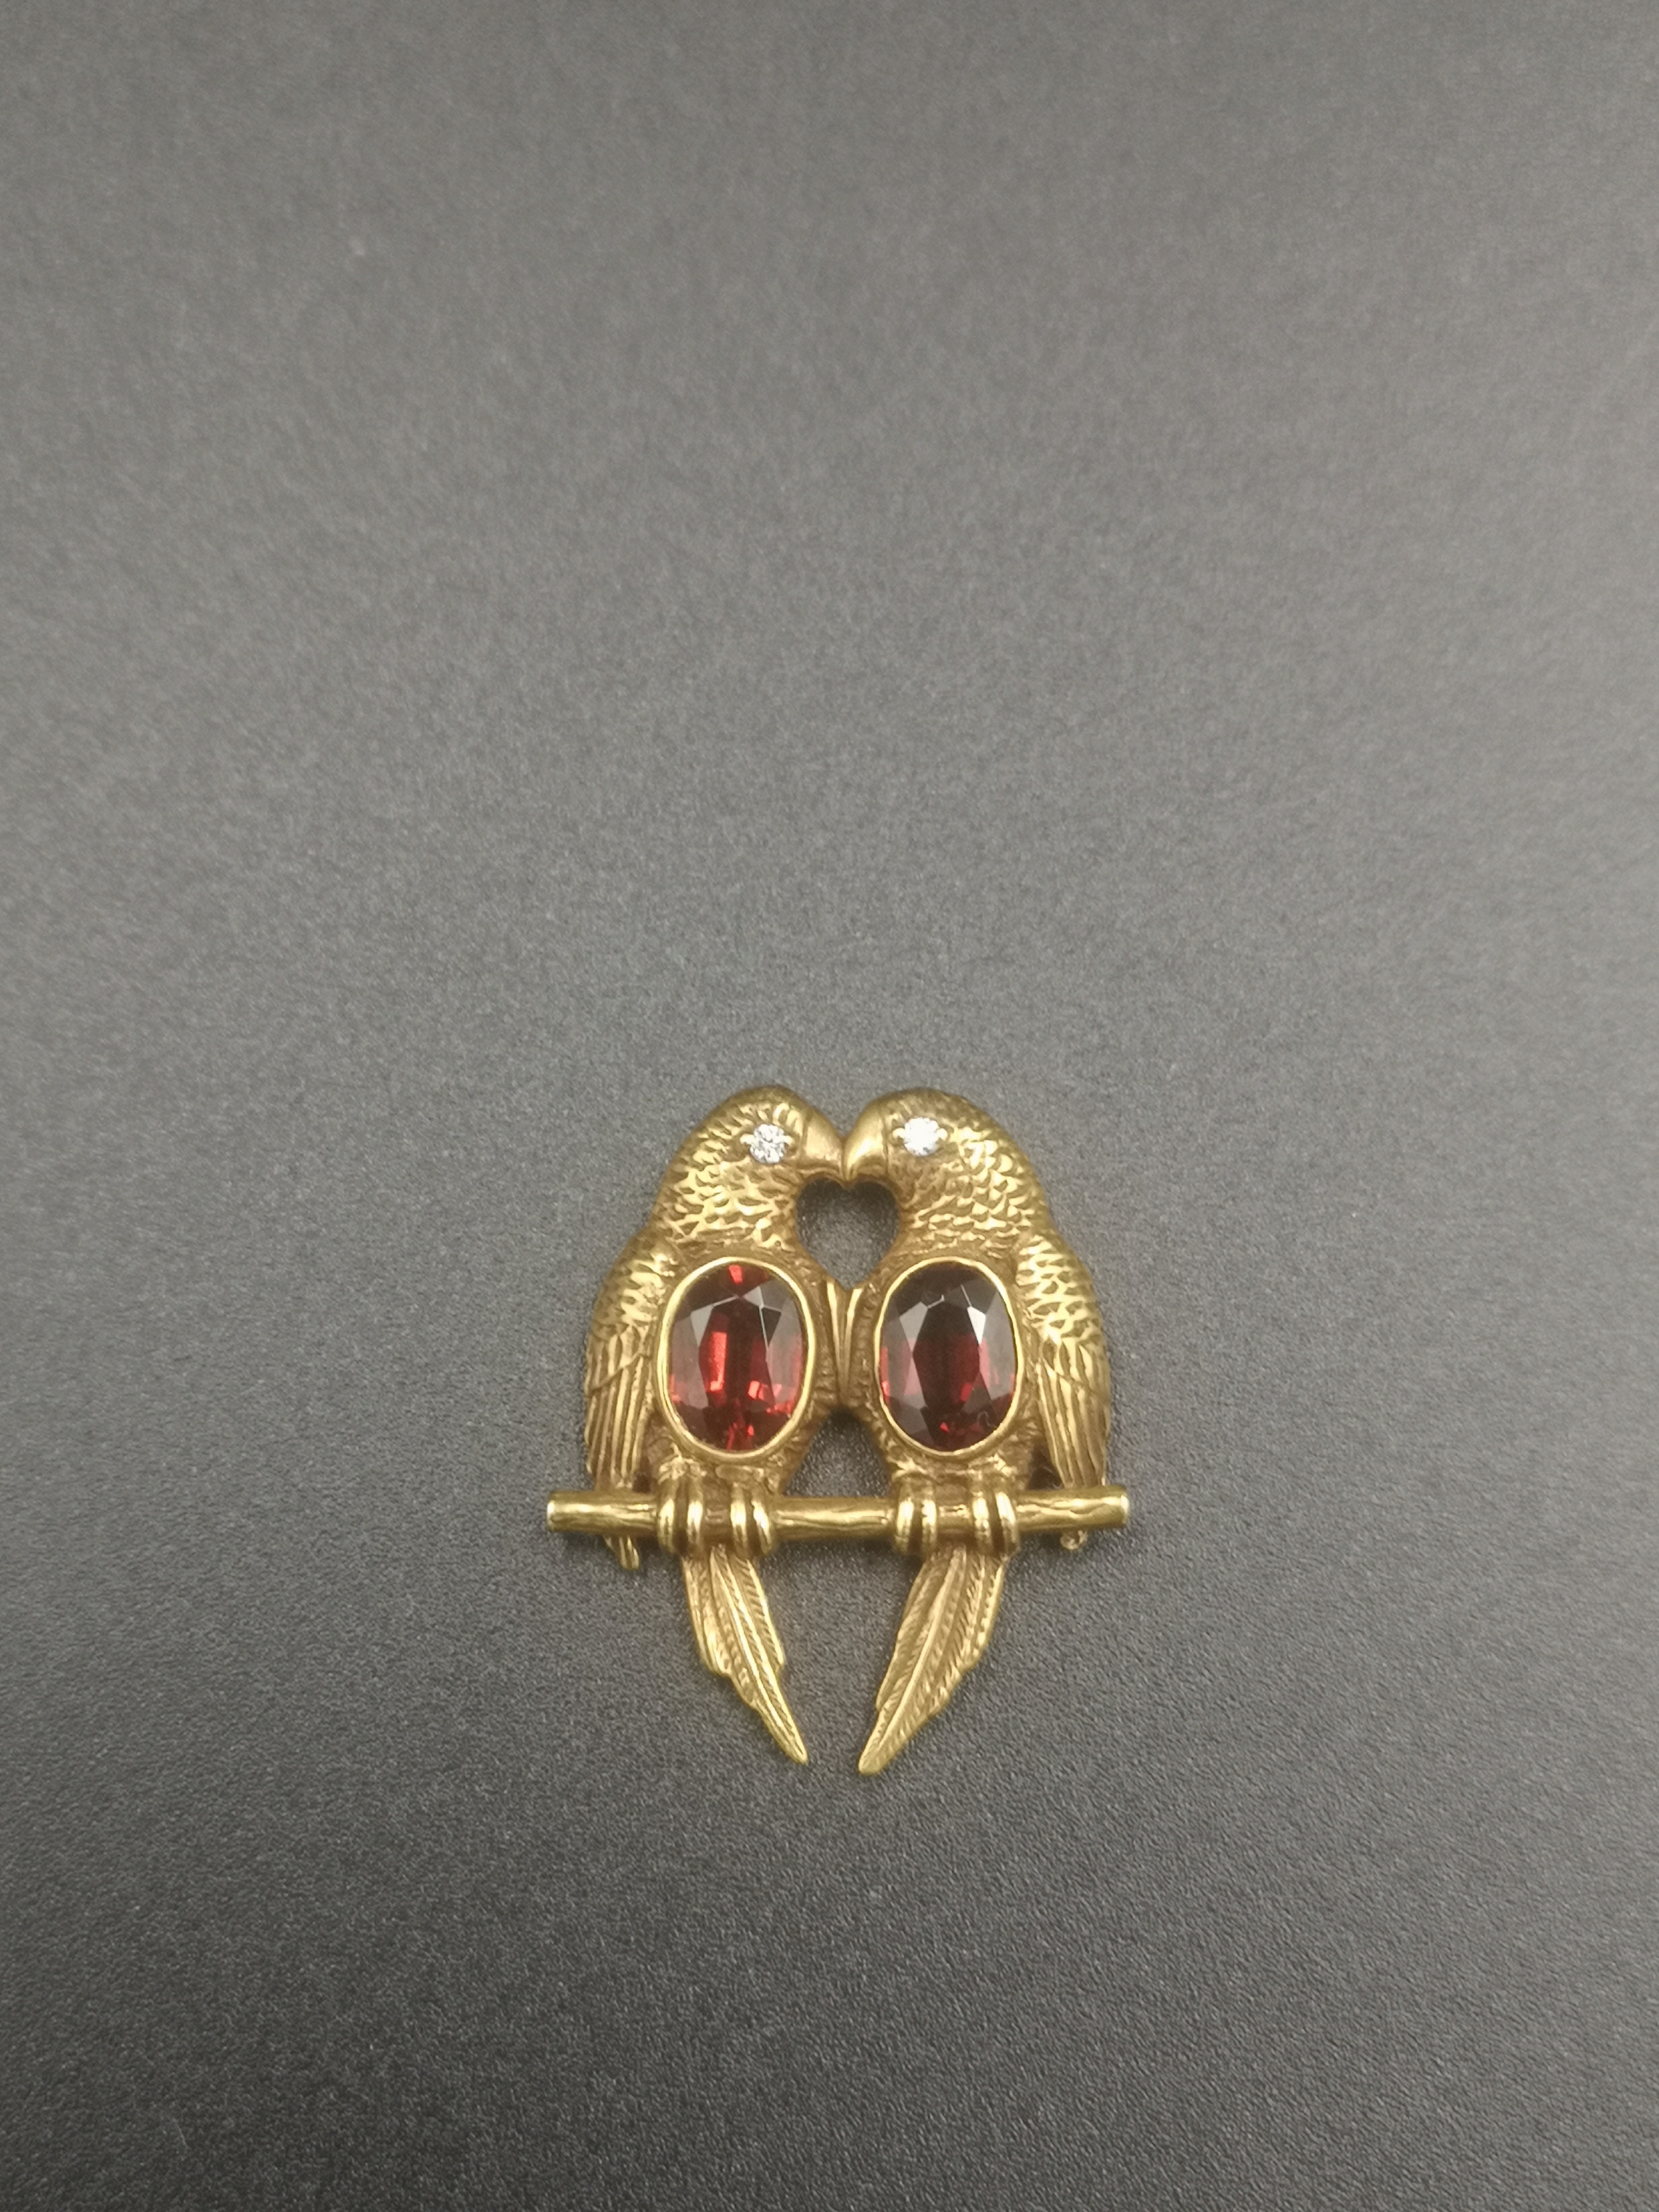 14ct gold, garnet and diamond brooch - Image 3 of 4